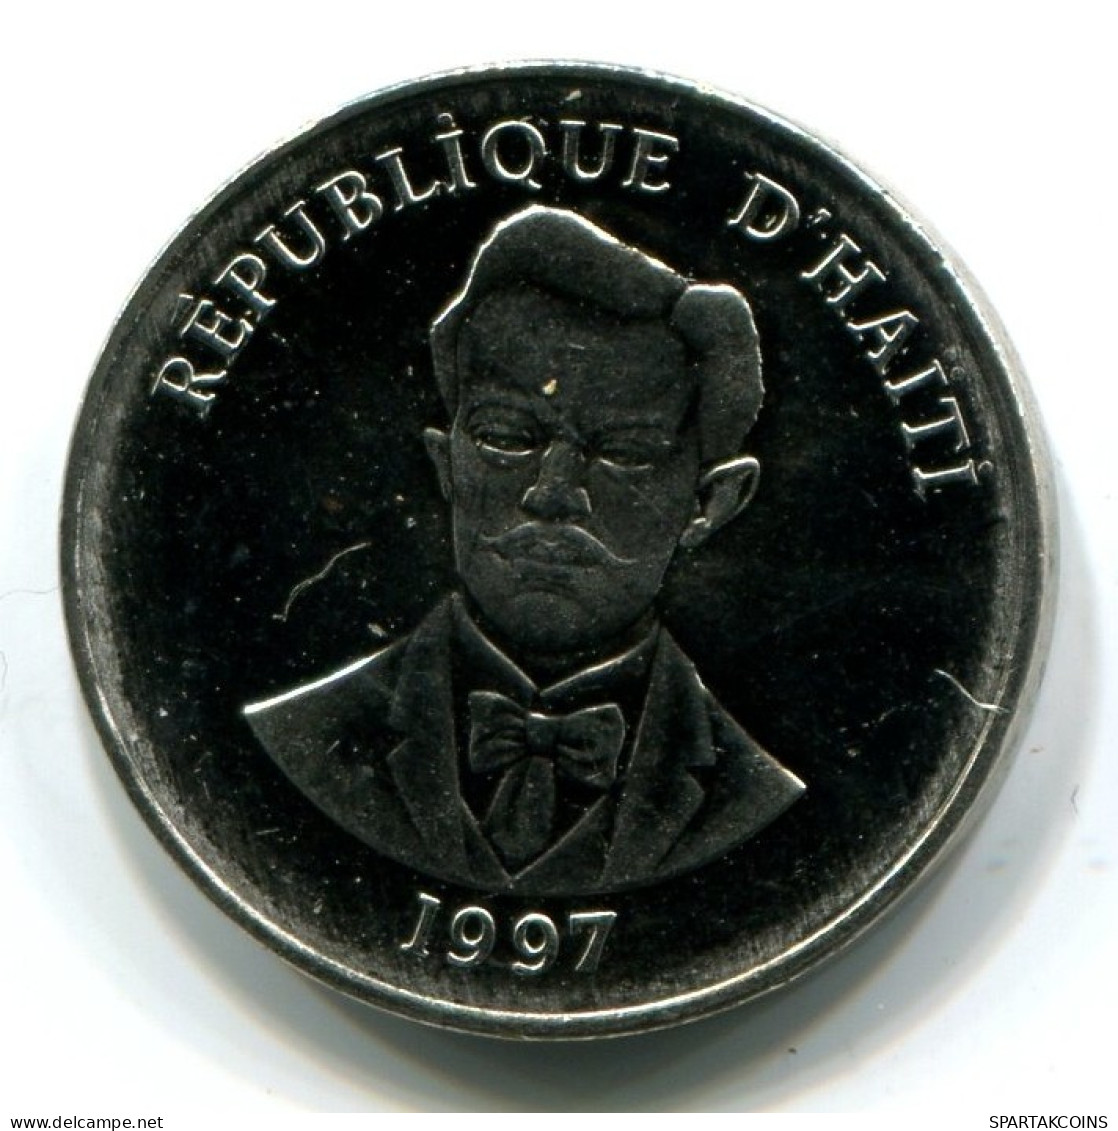 5 CENTIMES 1997 HAITÍ HAITI UNC Moneda #W11404.E.A - Haiti